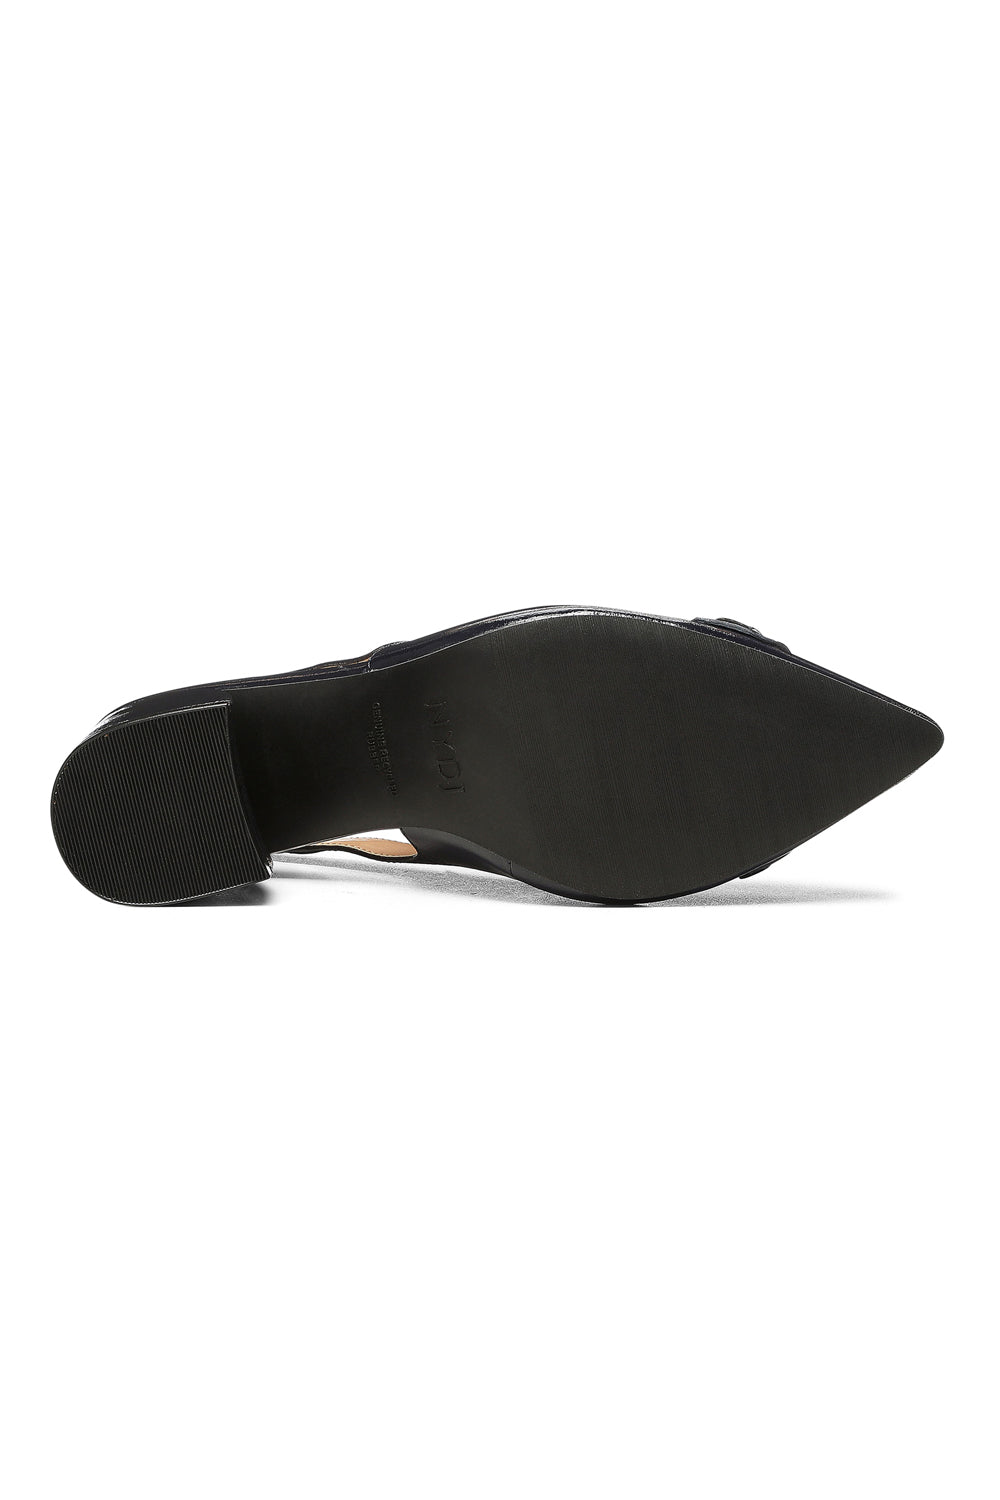 NYDJ Sanya Slingback Heels In Patent Leather - Navy